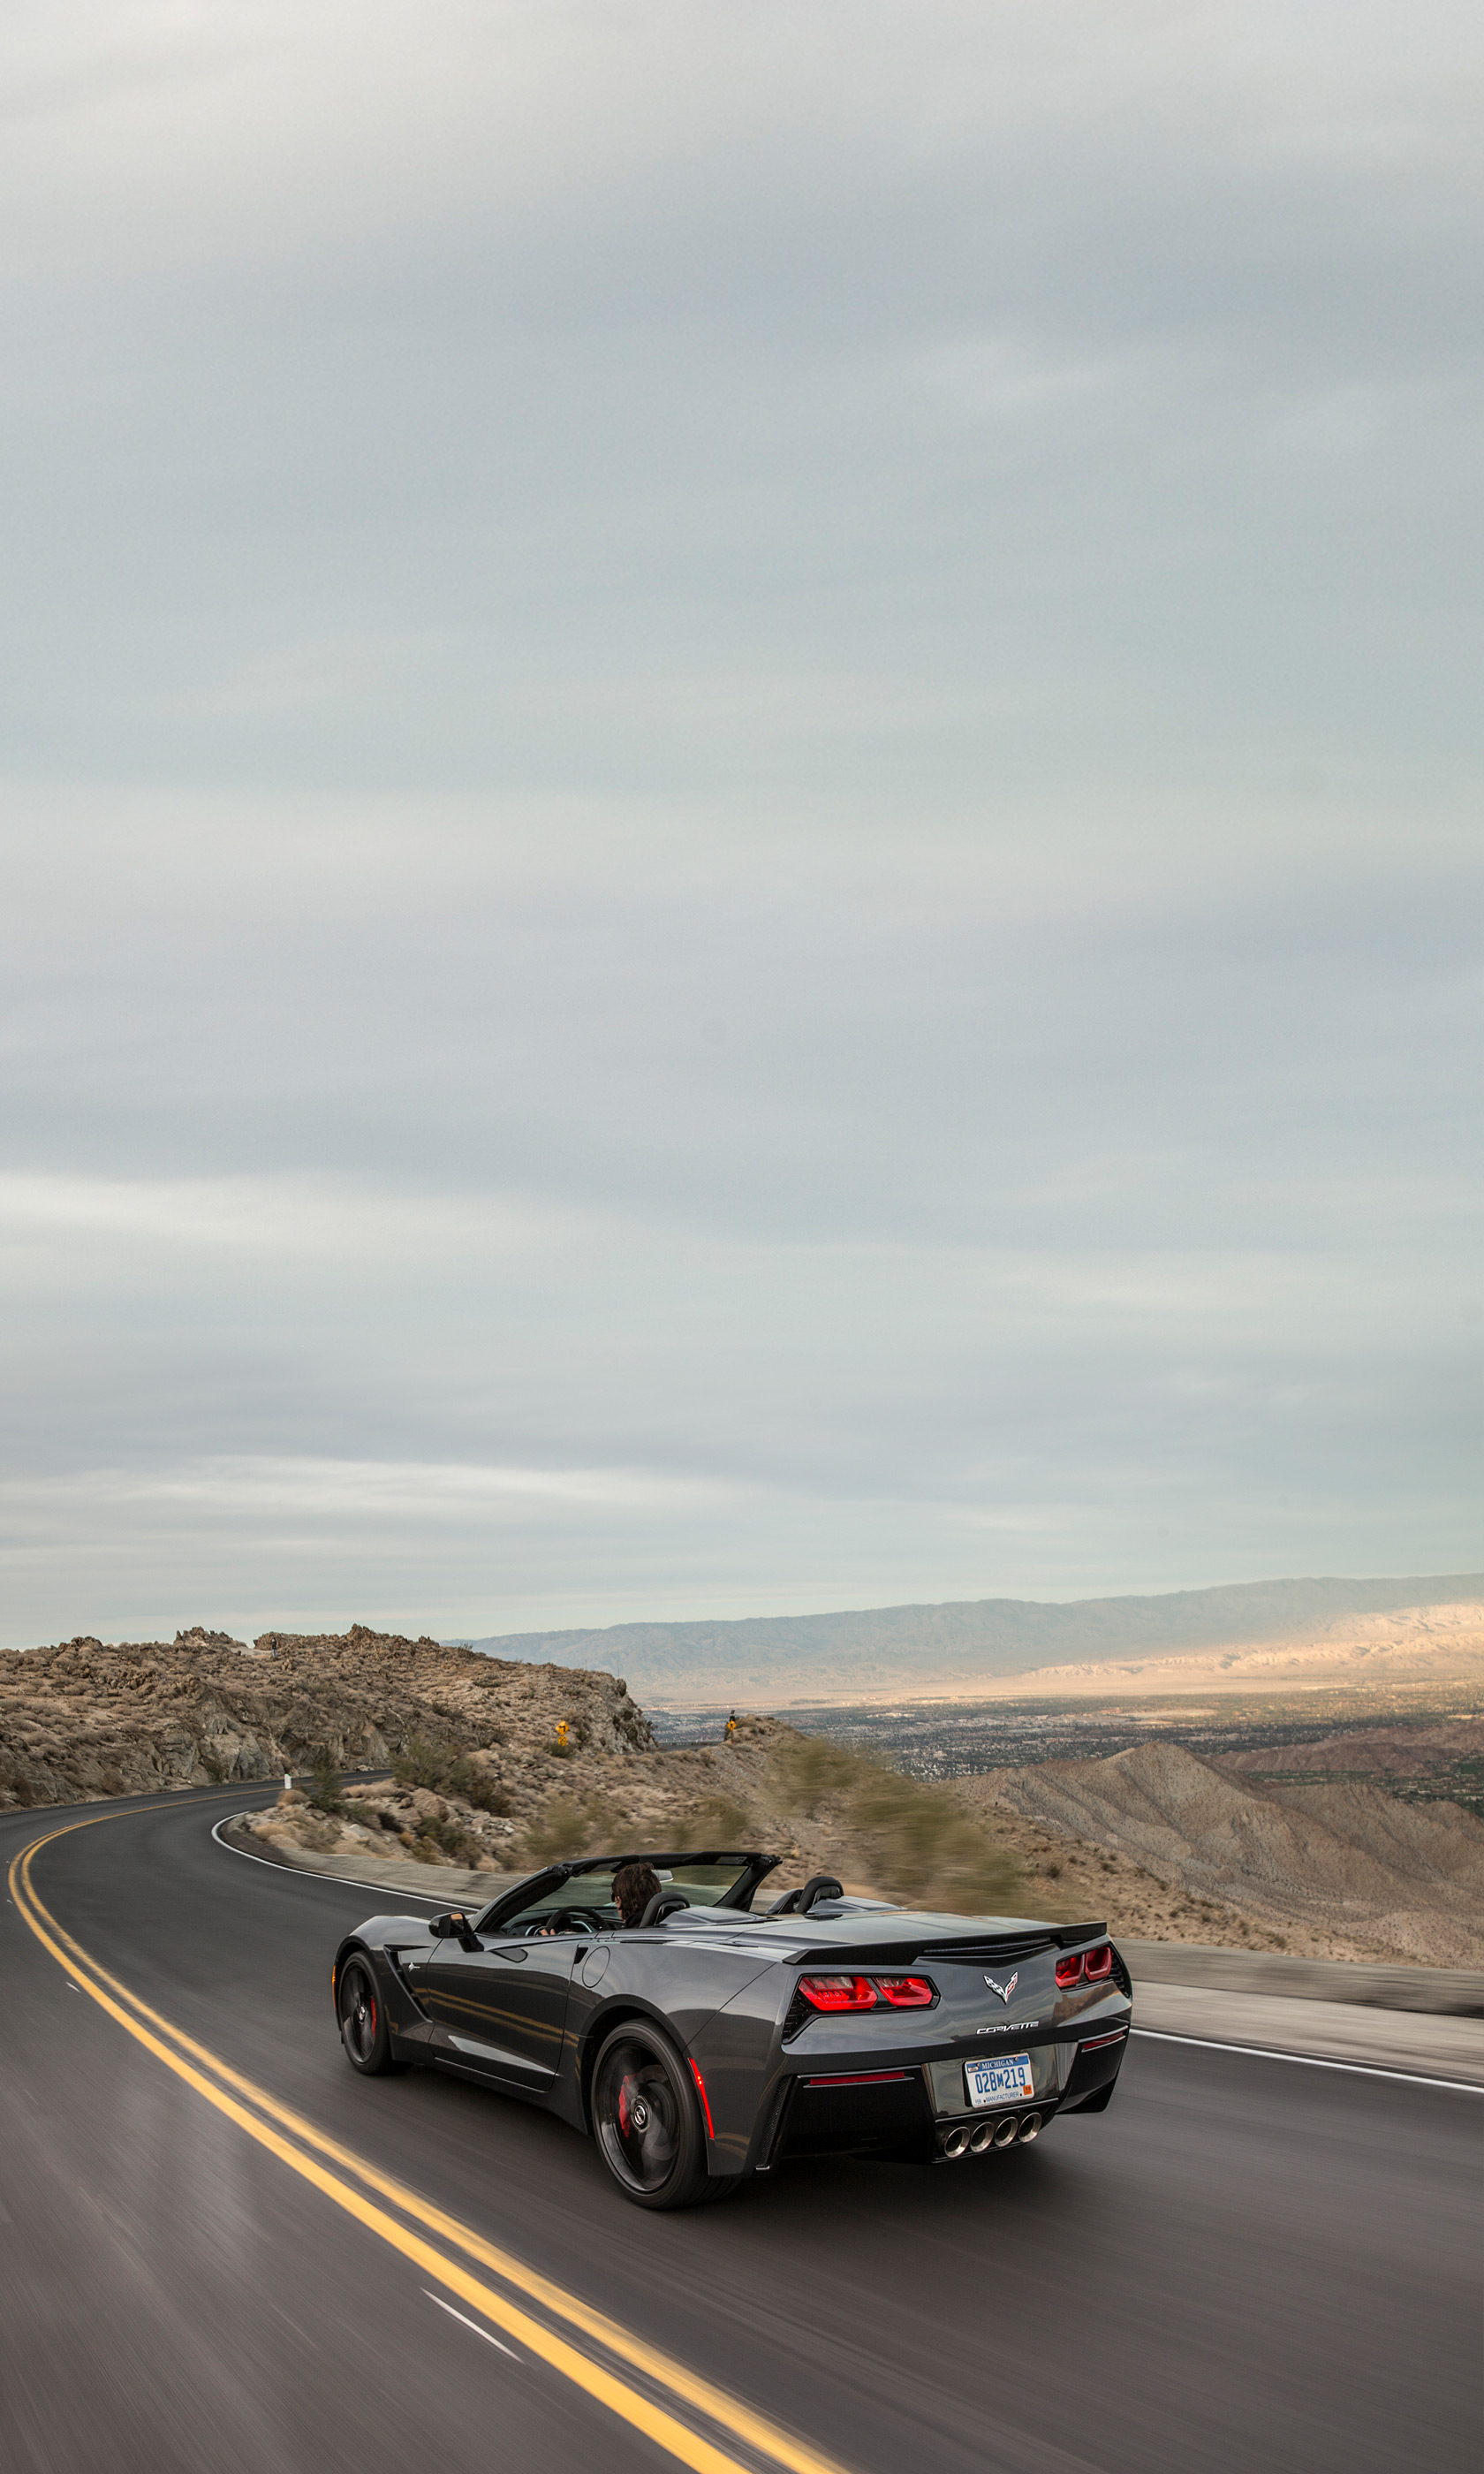  2014 Chevrolet Corvette Stingray Convertible Wallpaper.